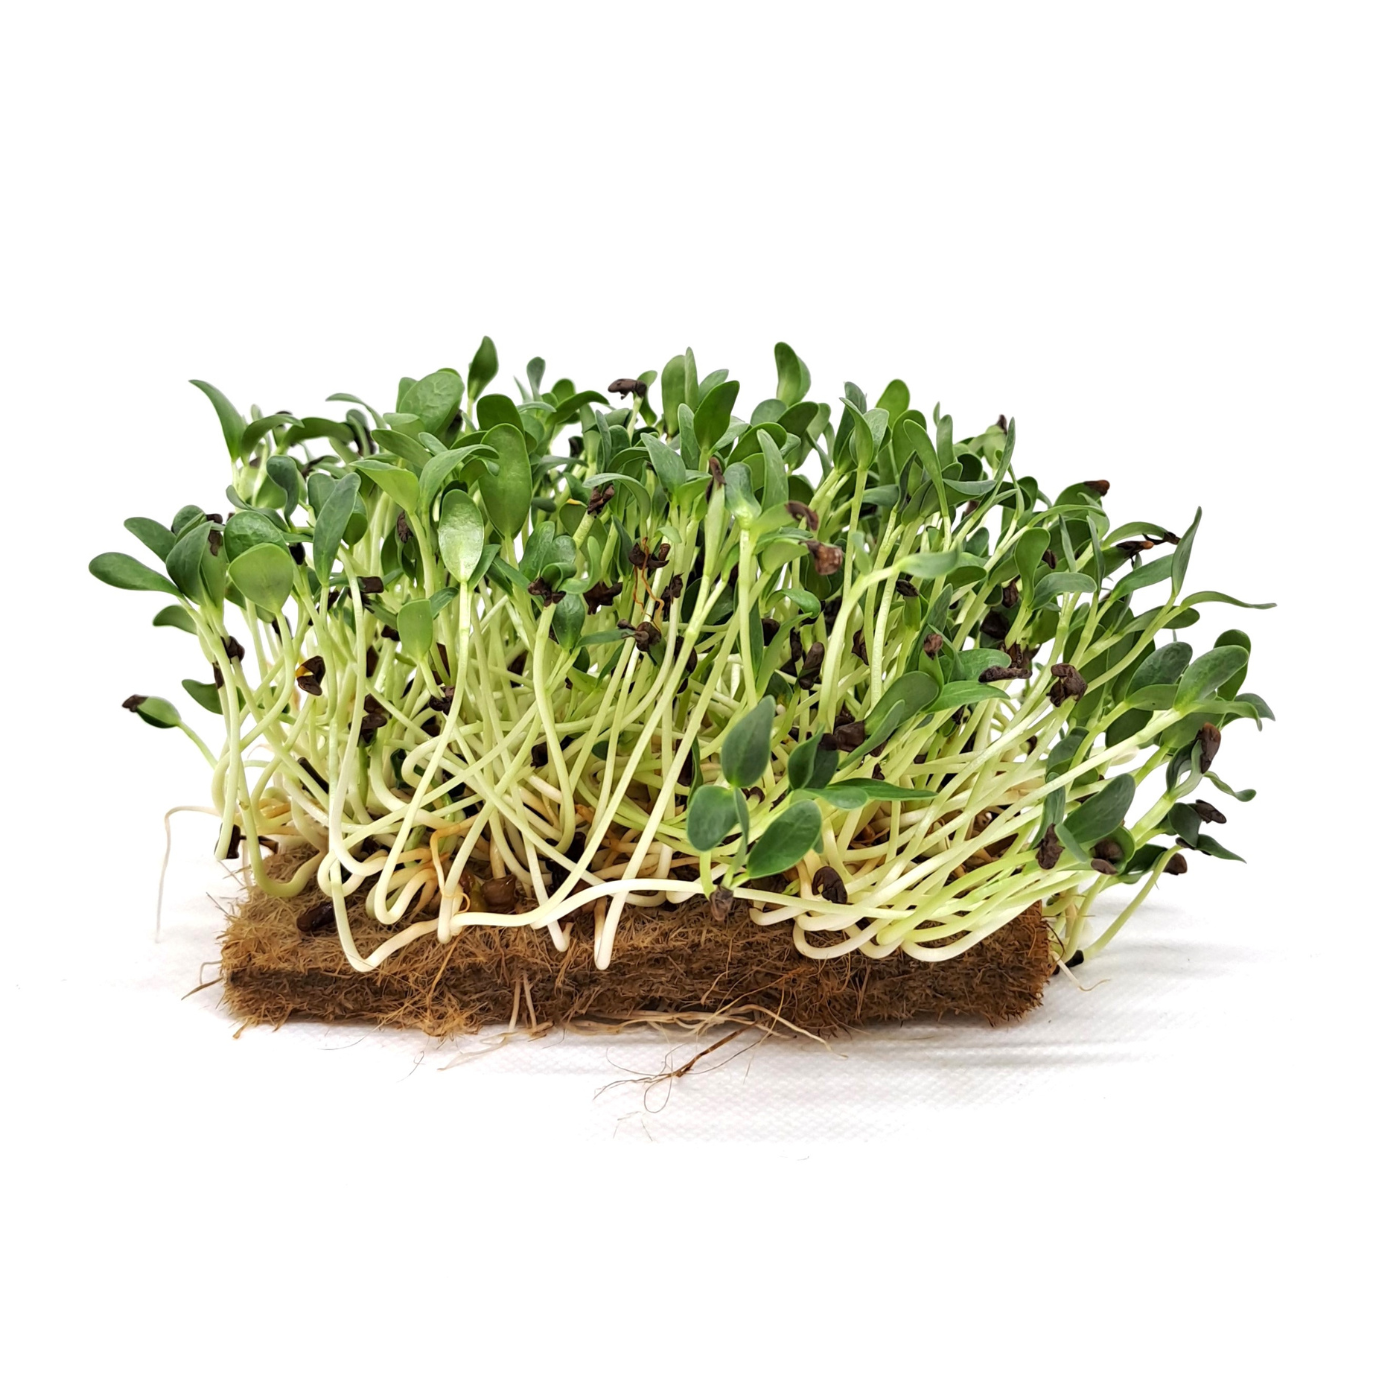 Organic seed for microgreens